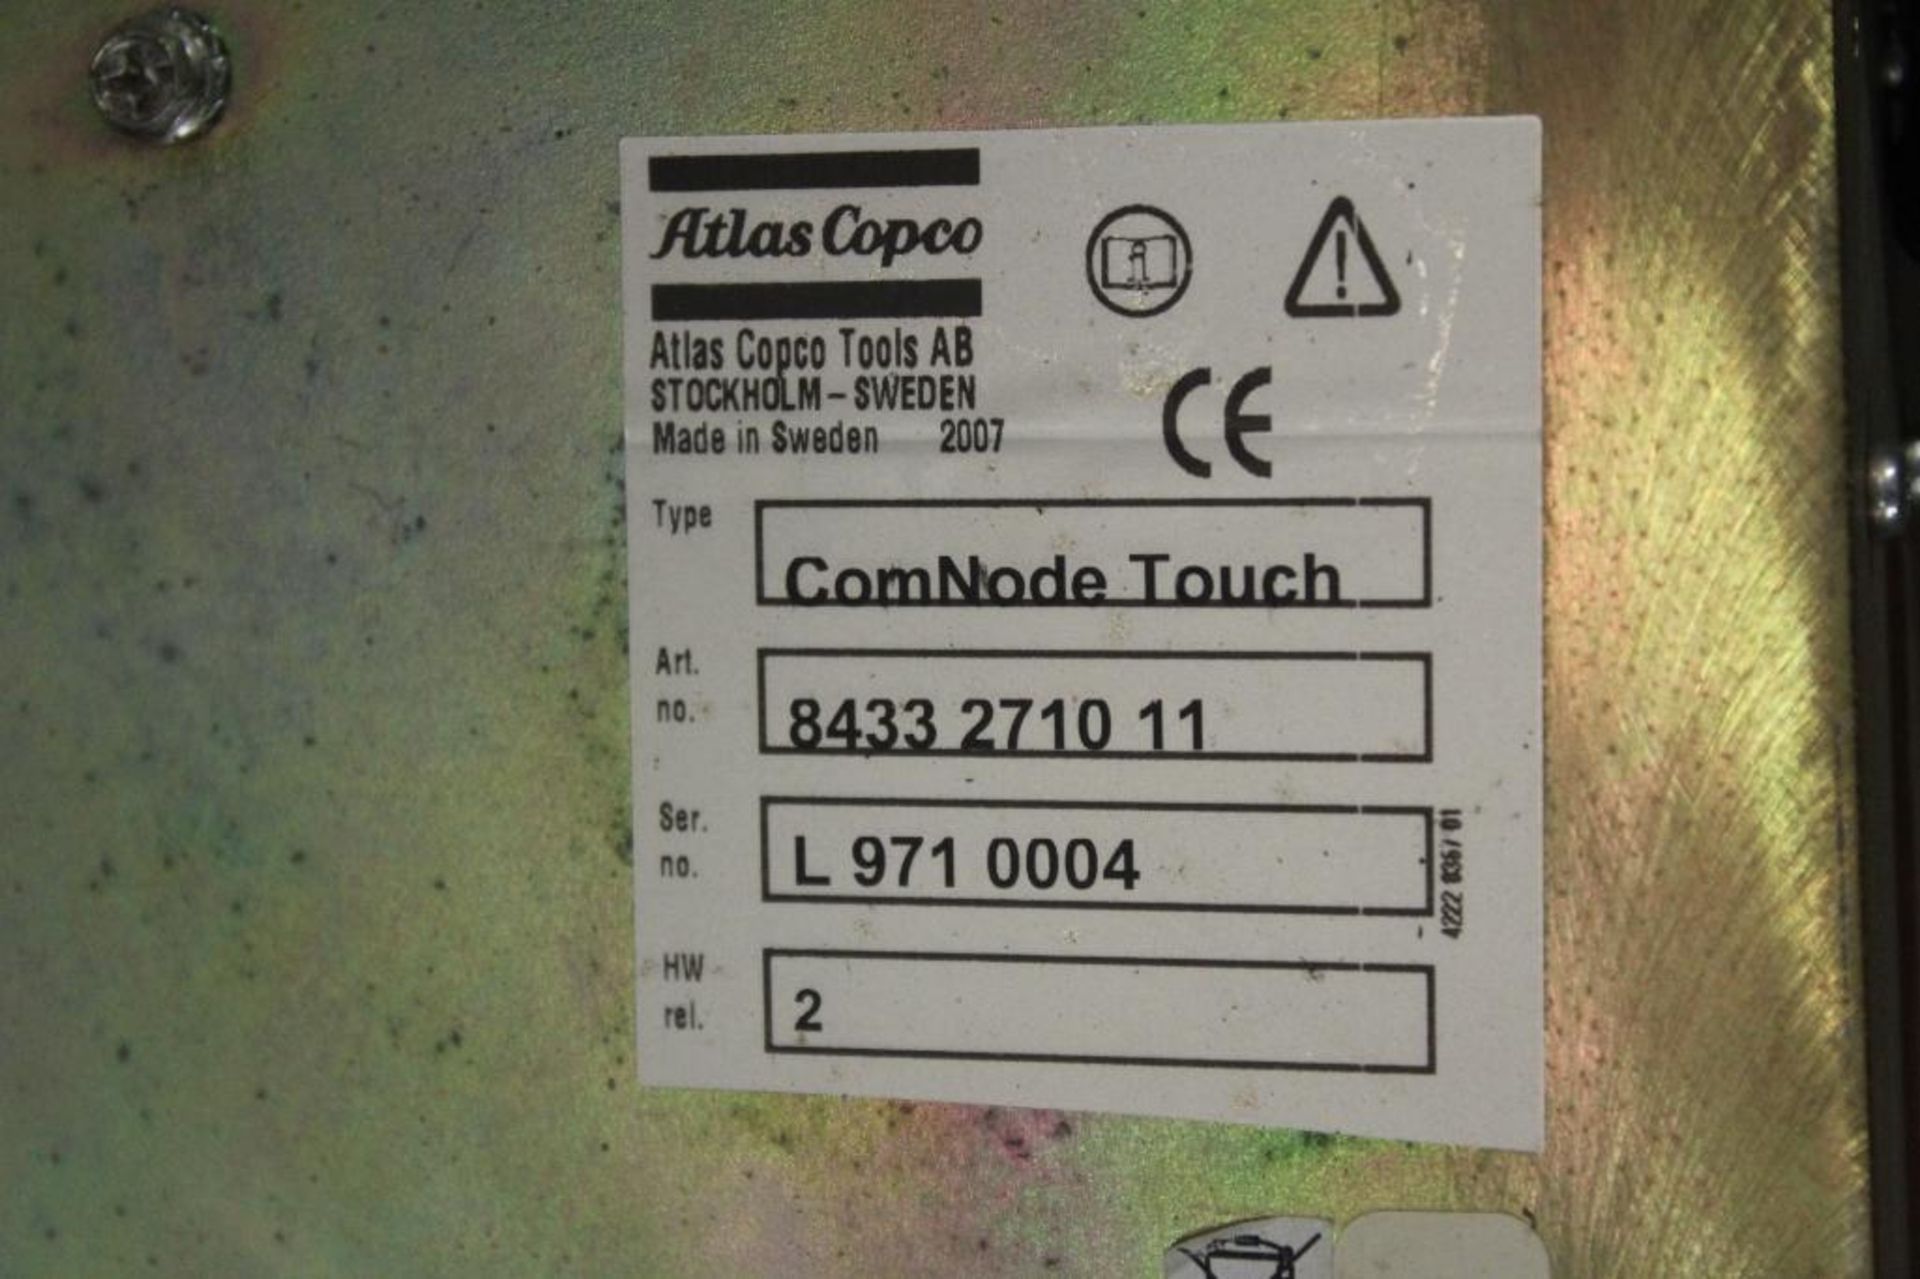 (Lot of 2) Atlas Copco 8433 2710 11 Controller - Image 2 of 2